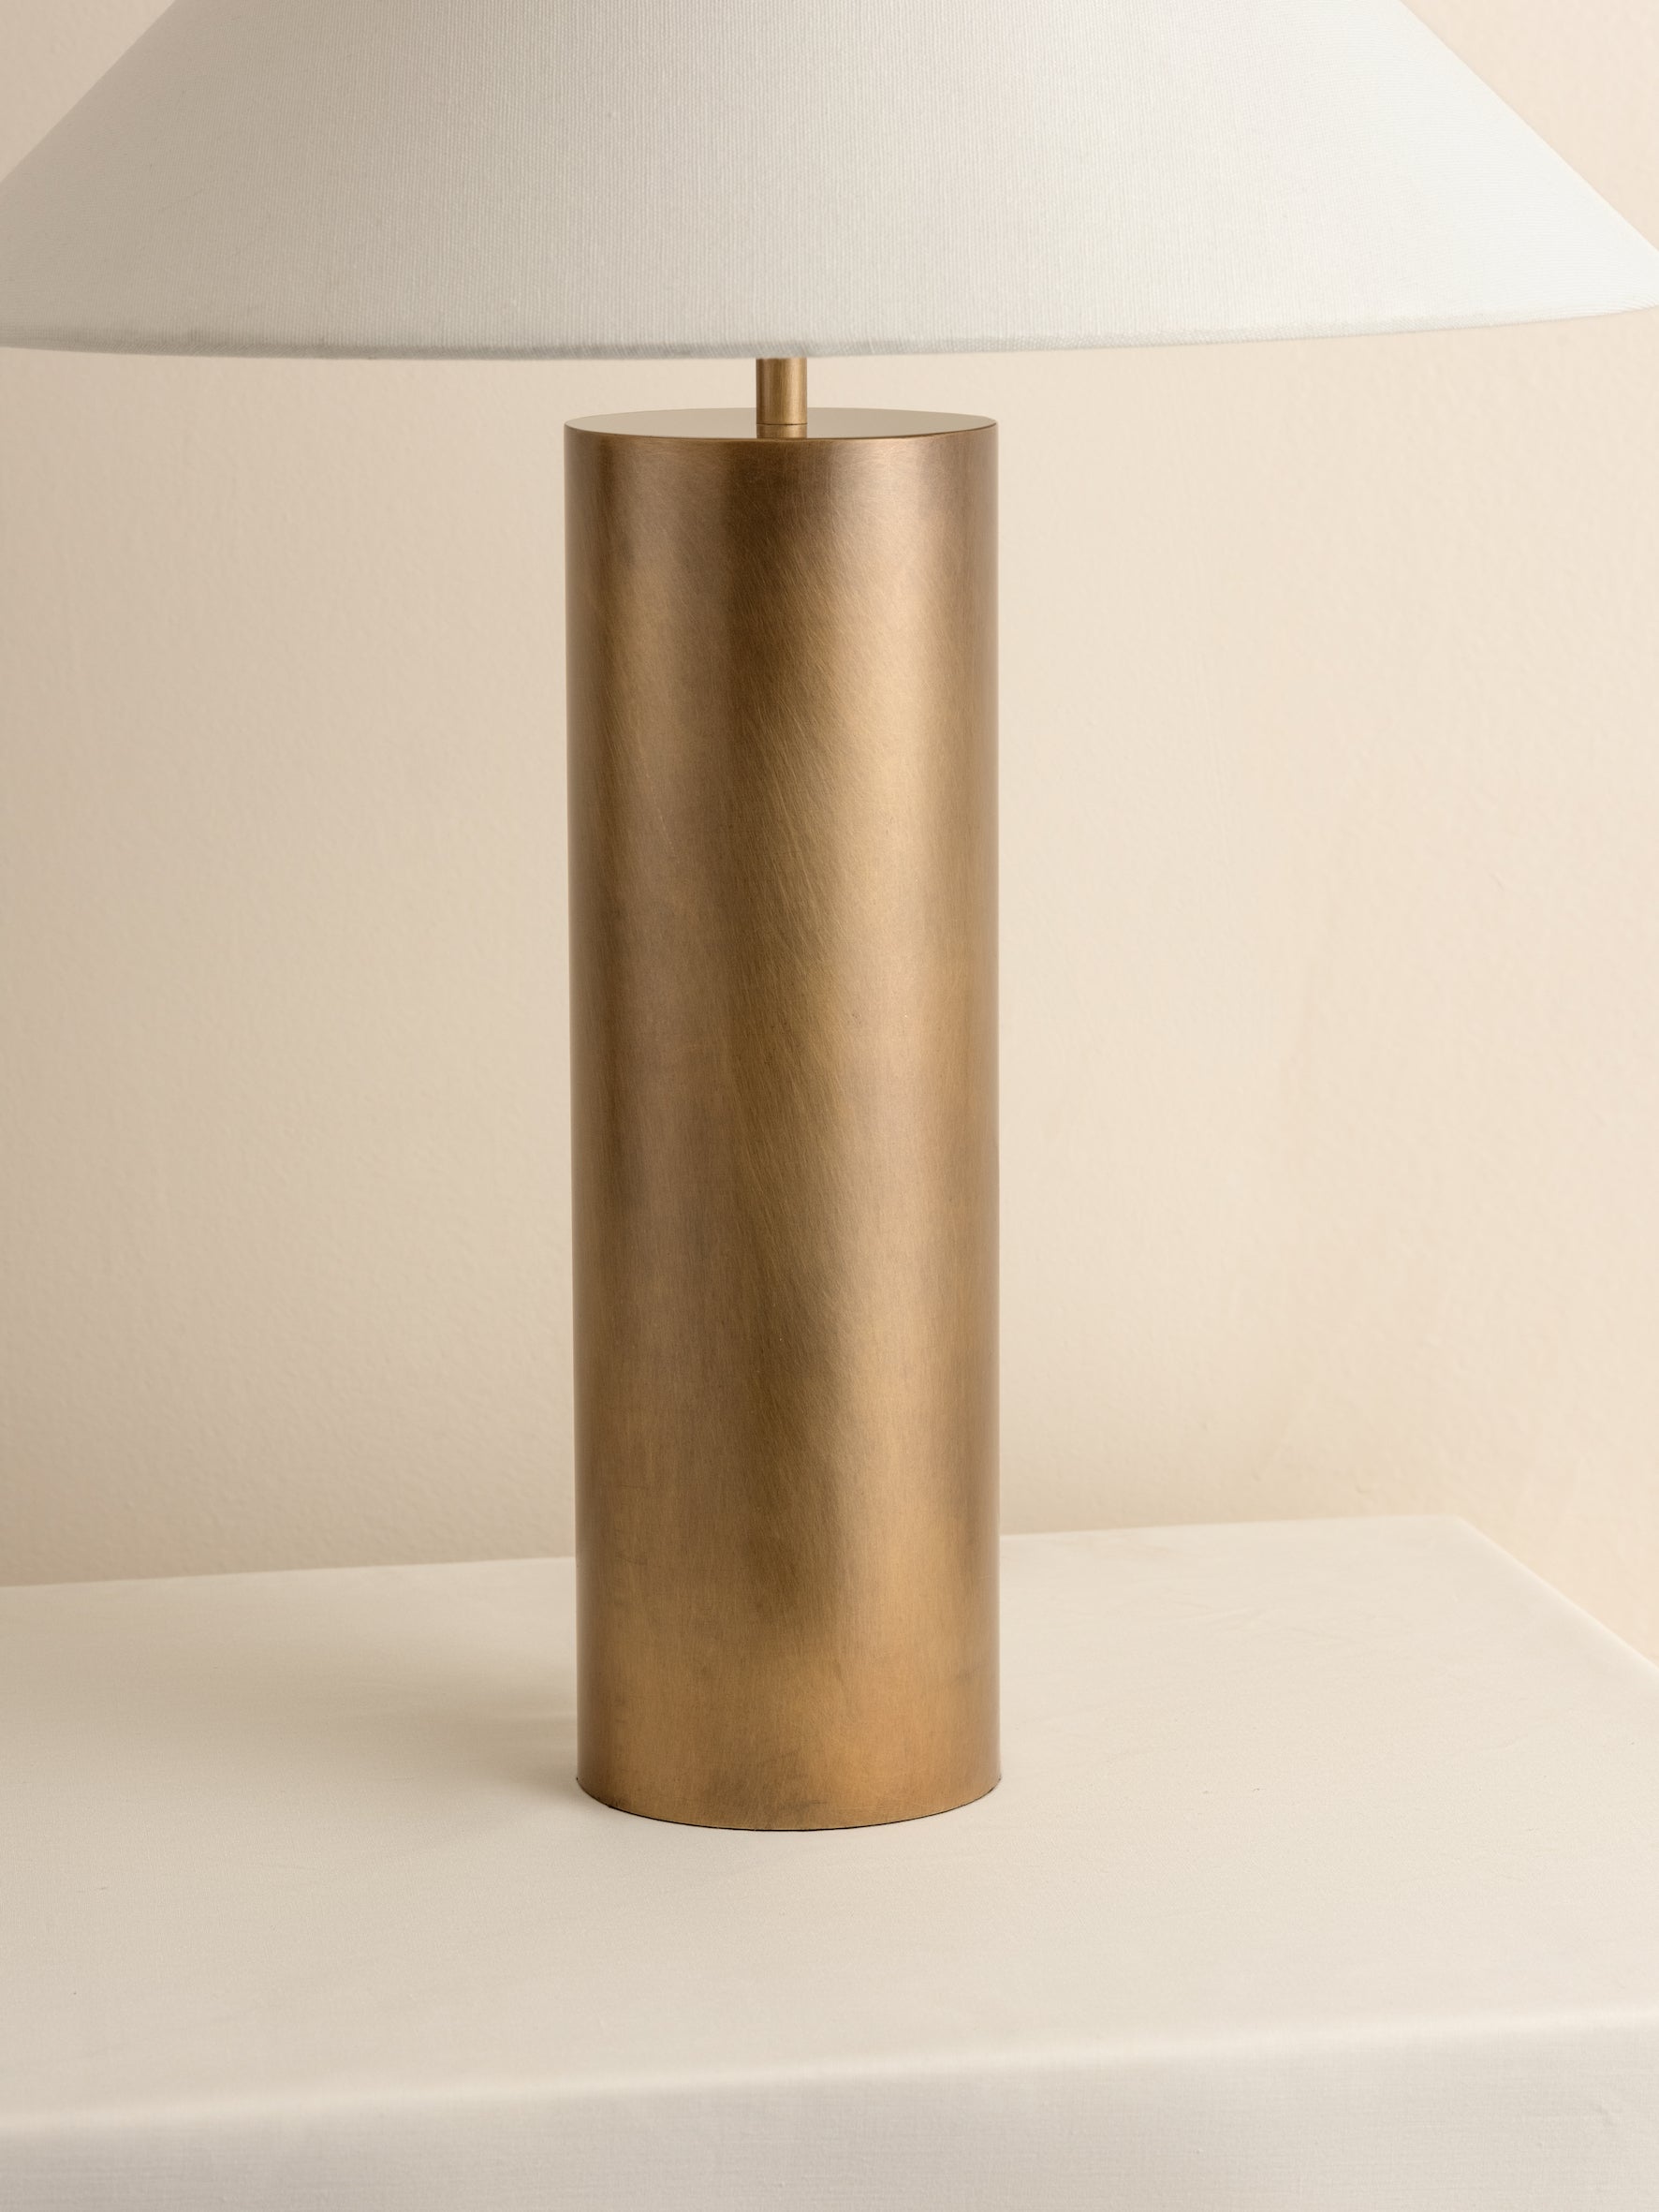 Bleeker - aged brass and linen table lamp | Table Lamp | Lights & Lamps Inc | Modern Affordable Designer Lighting | USA